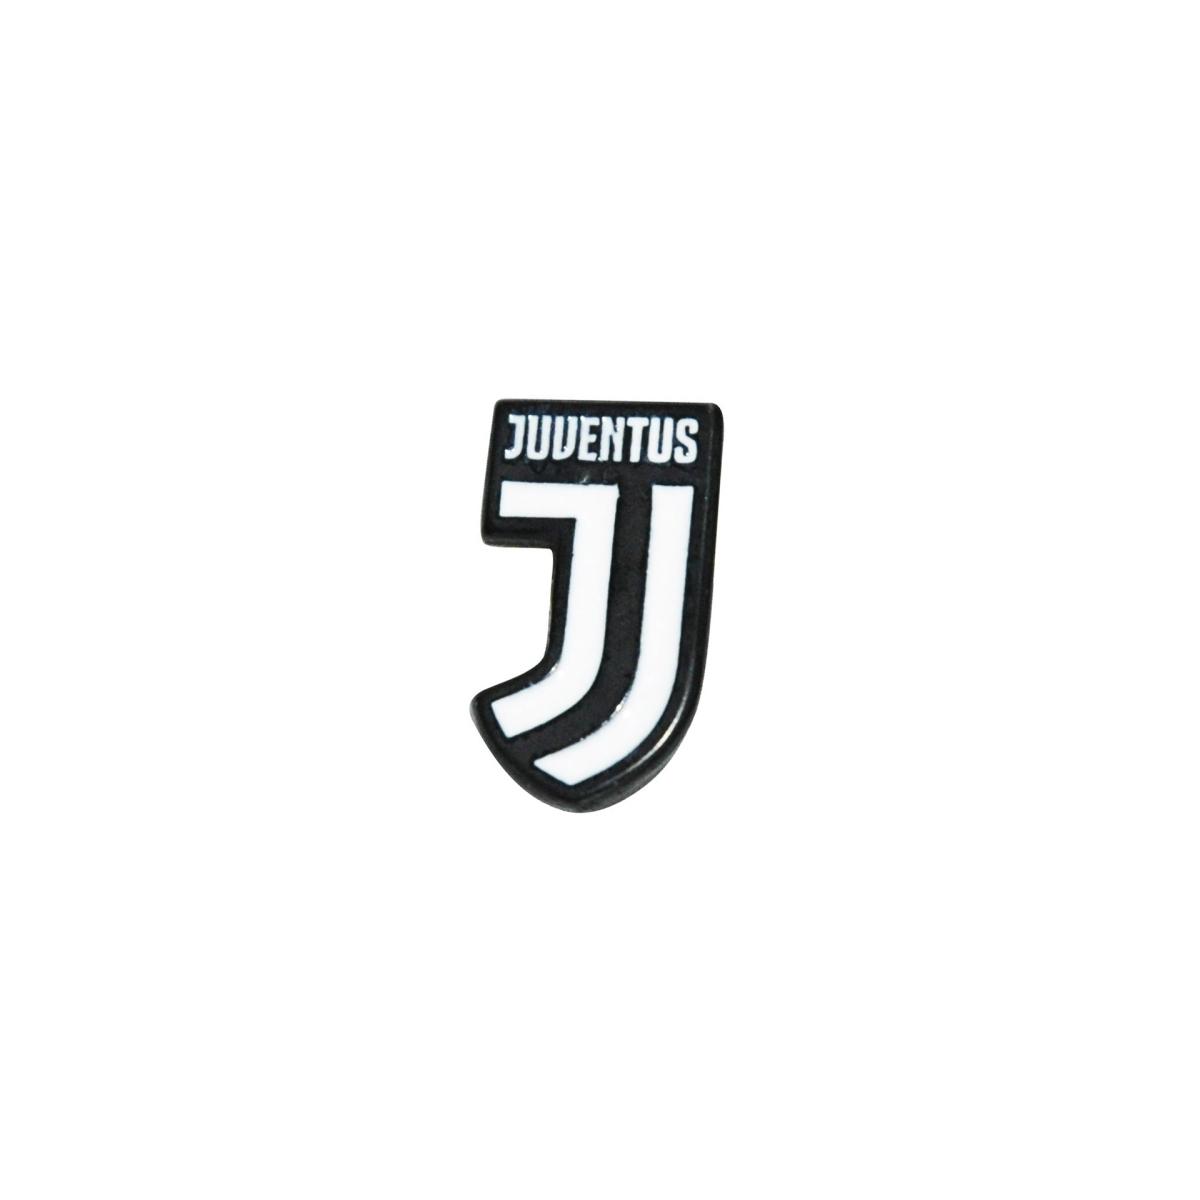 Juventus Distintivo in metallo smaltato logo ufficiale juventus JU1000  8032755390978